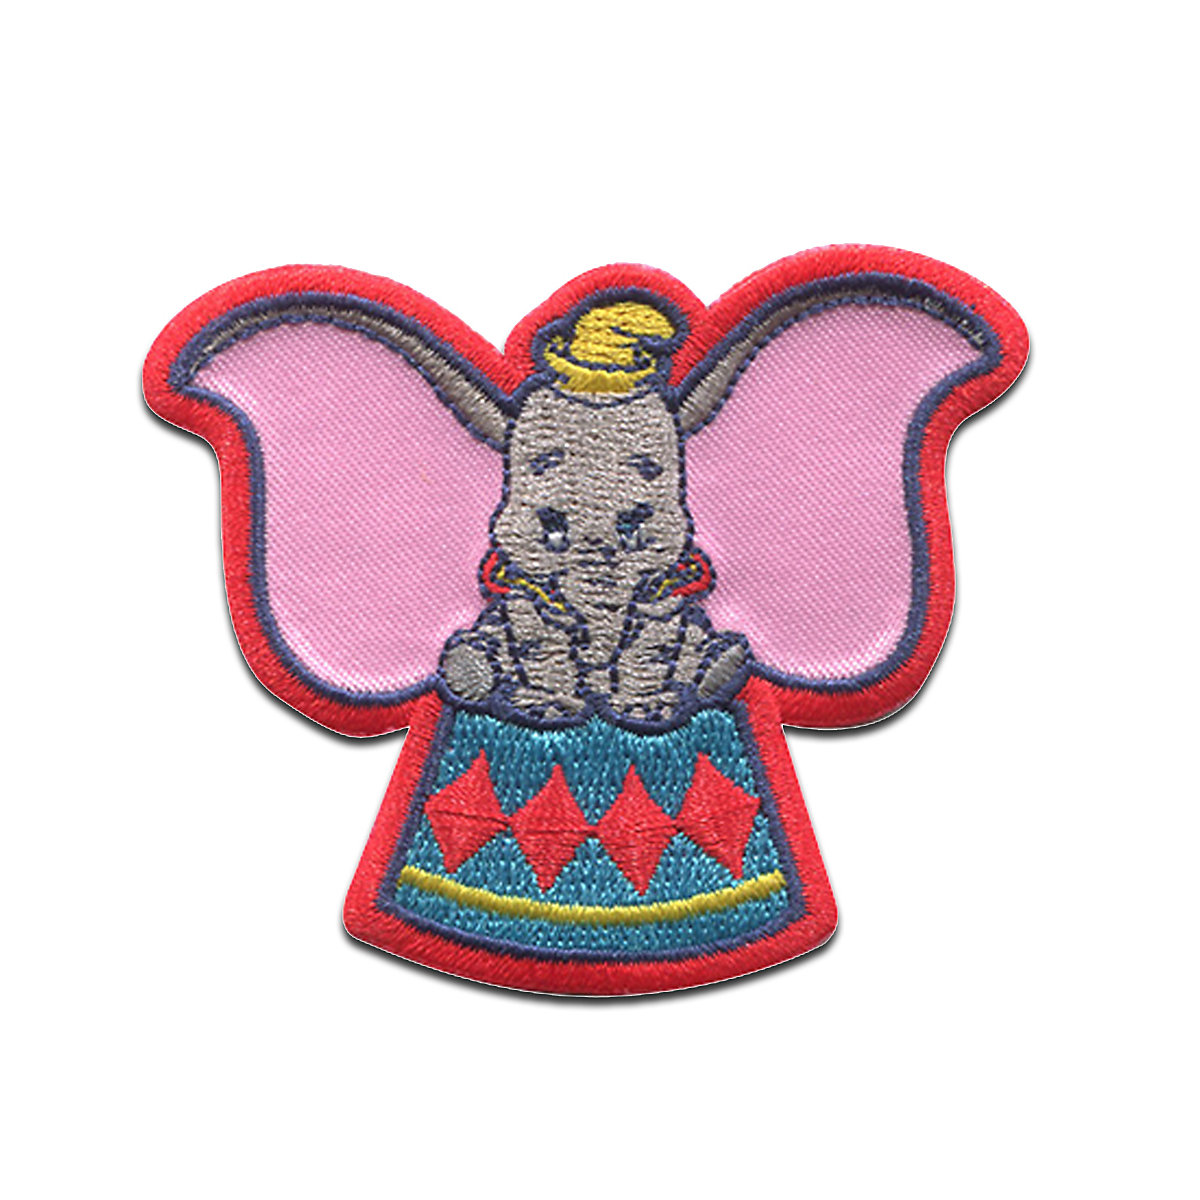 Disney Aufnäher / Bügelbild Dumbo Elefant Tier Nähsets für Kinder